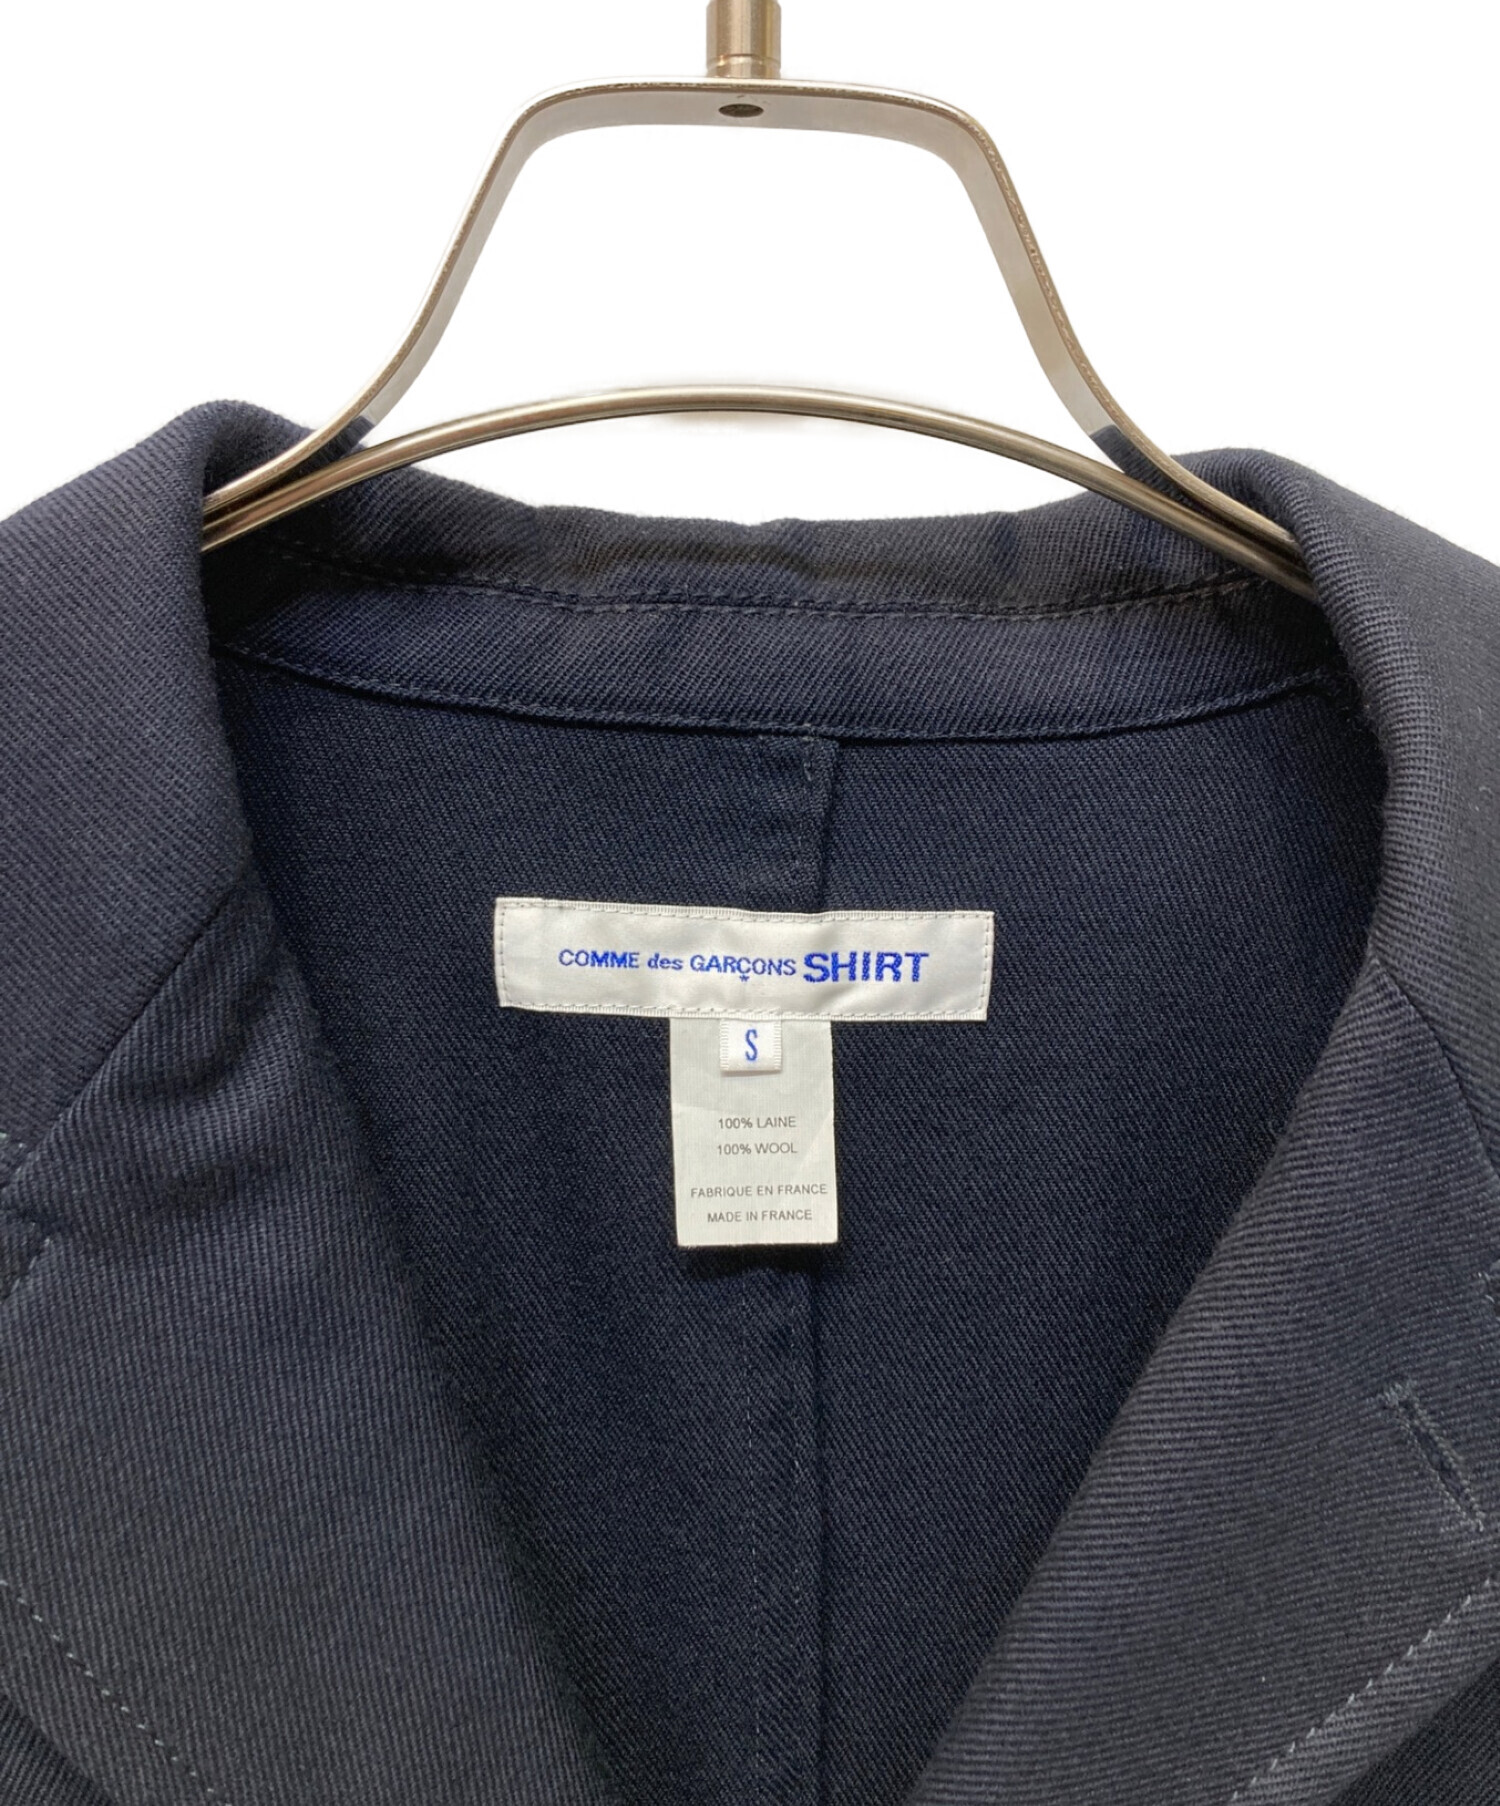 COMME des GARCONS SHIRT ウールシャツジャケット - シャツ